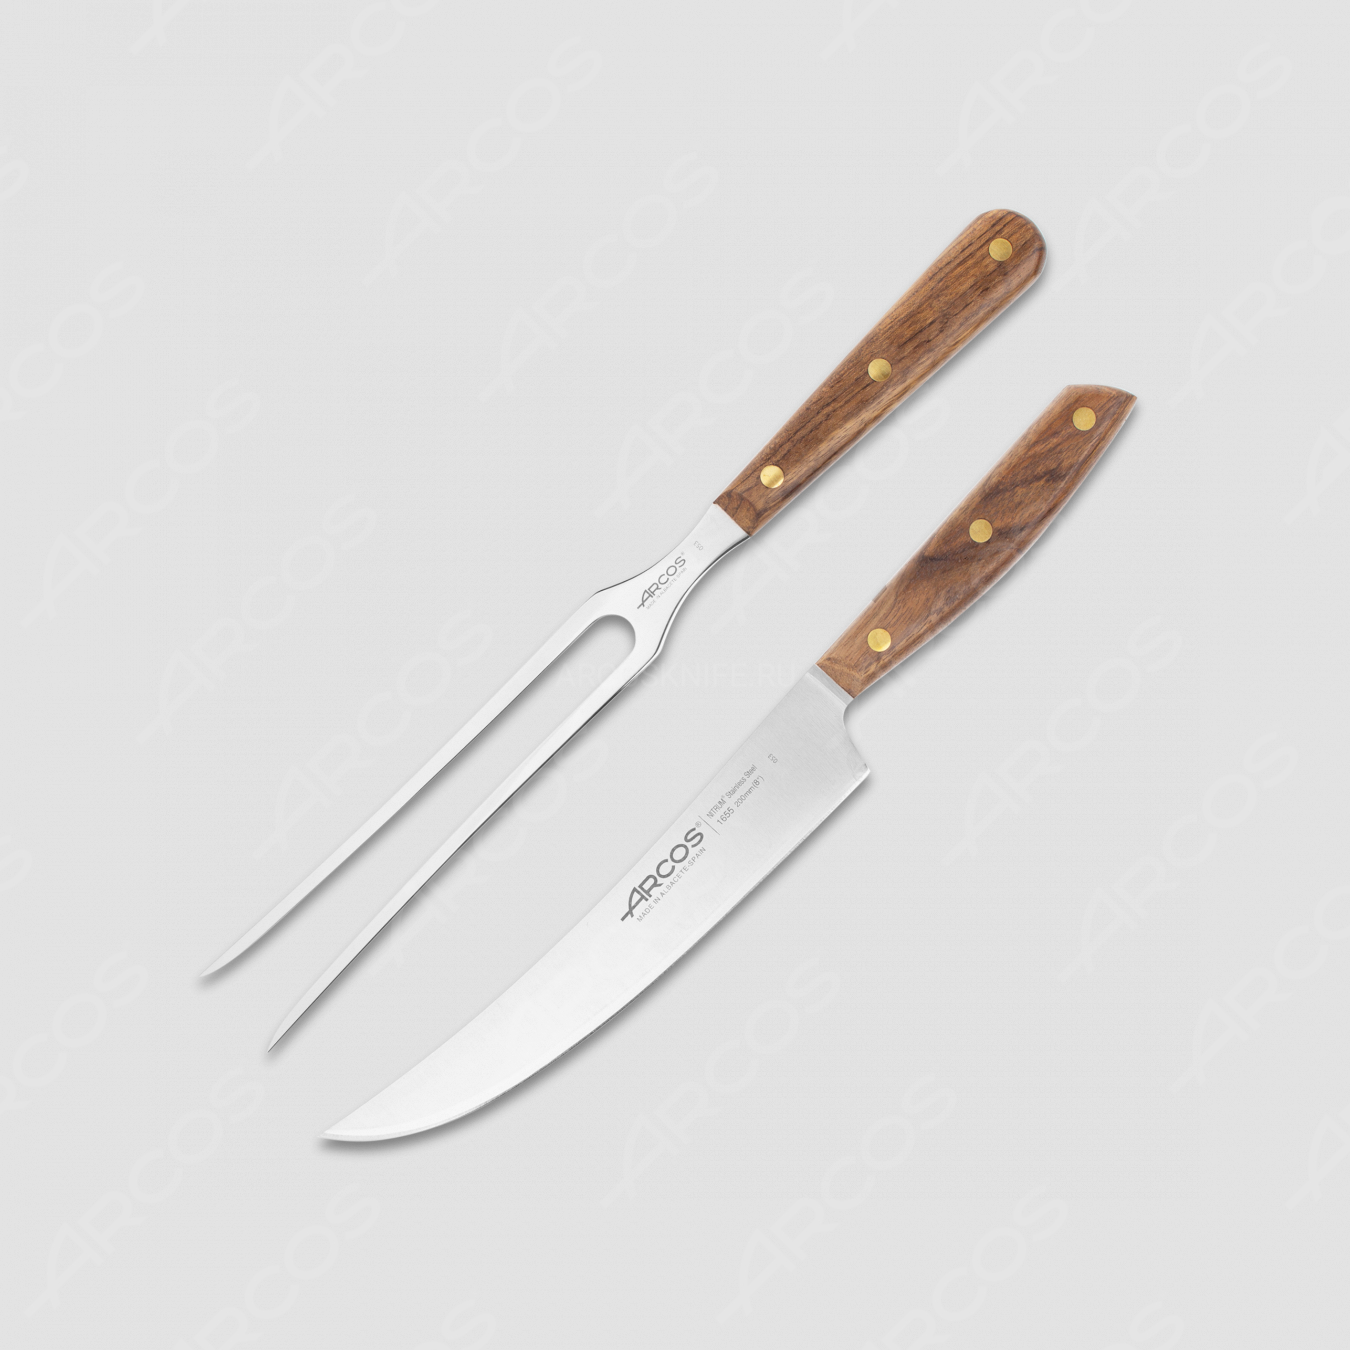 Набор для барбекю, 2 предмета: нож для нарезки и вилка для мяса, рукоять прессованное дерево, серия Nordika, ARCOS, Испания